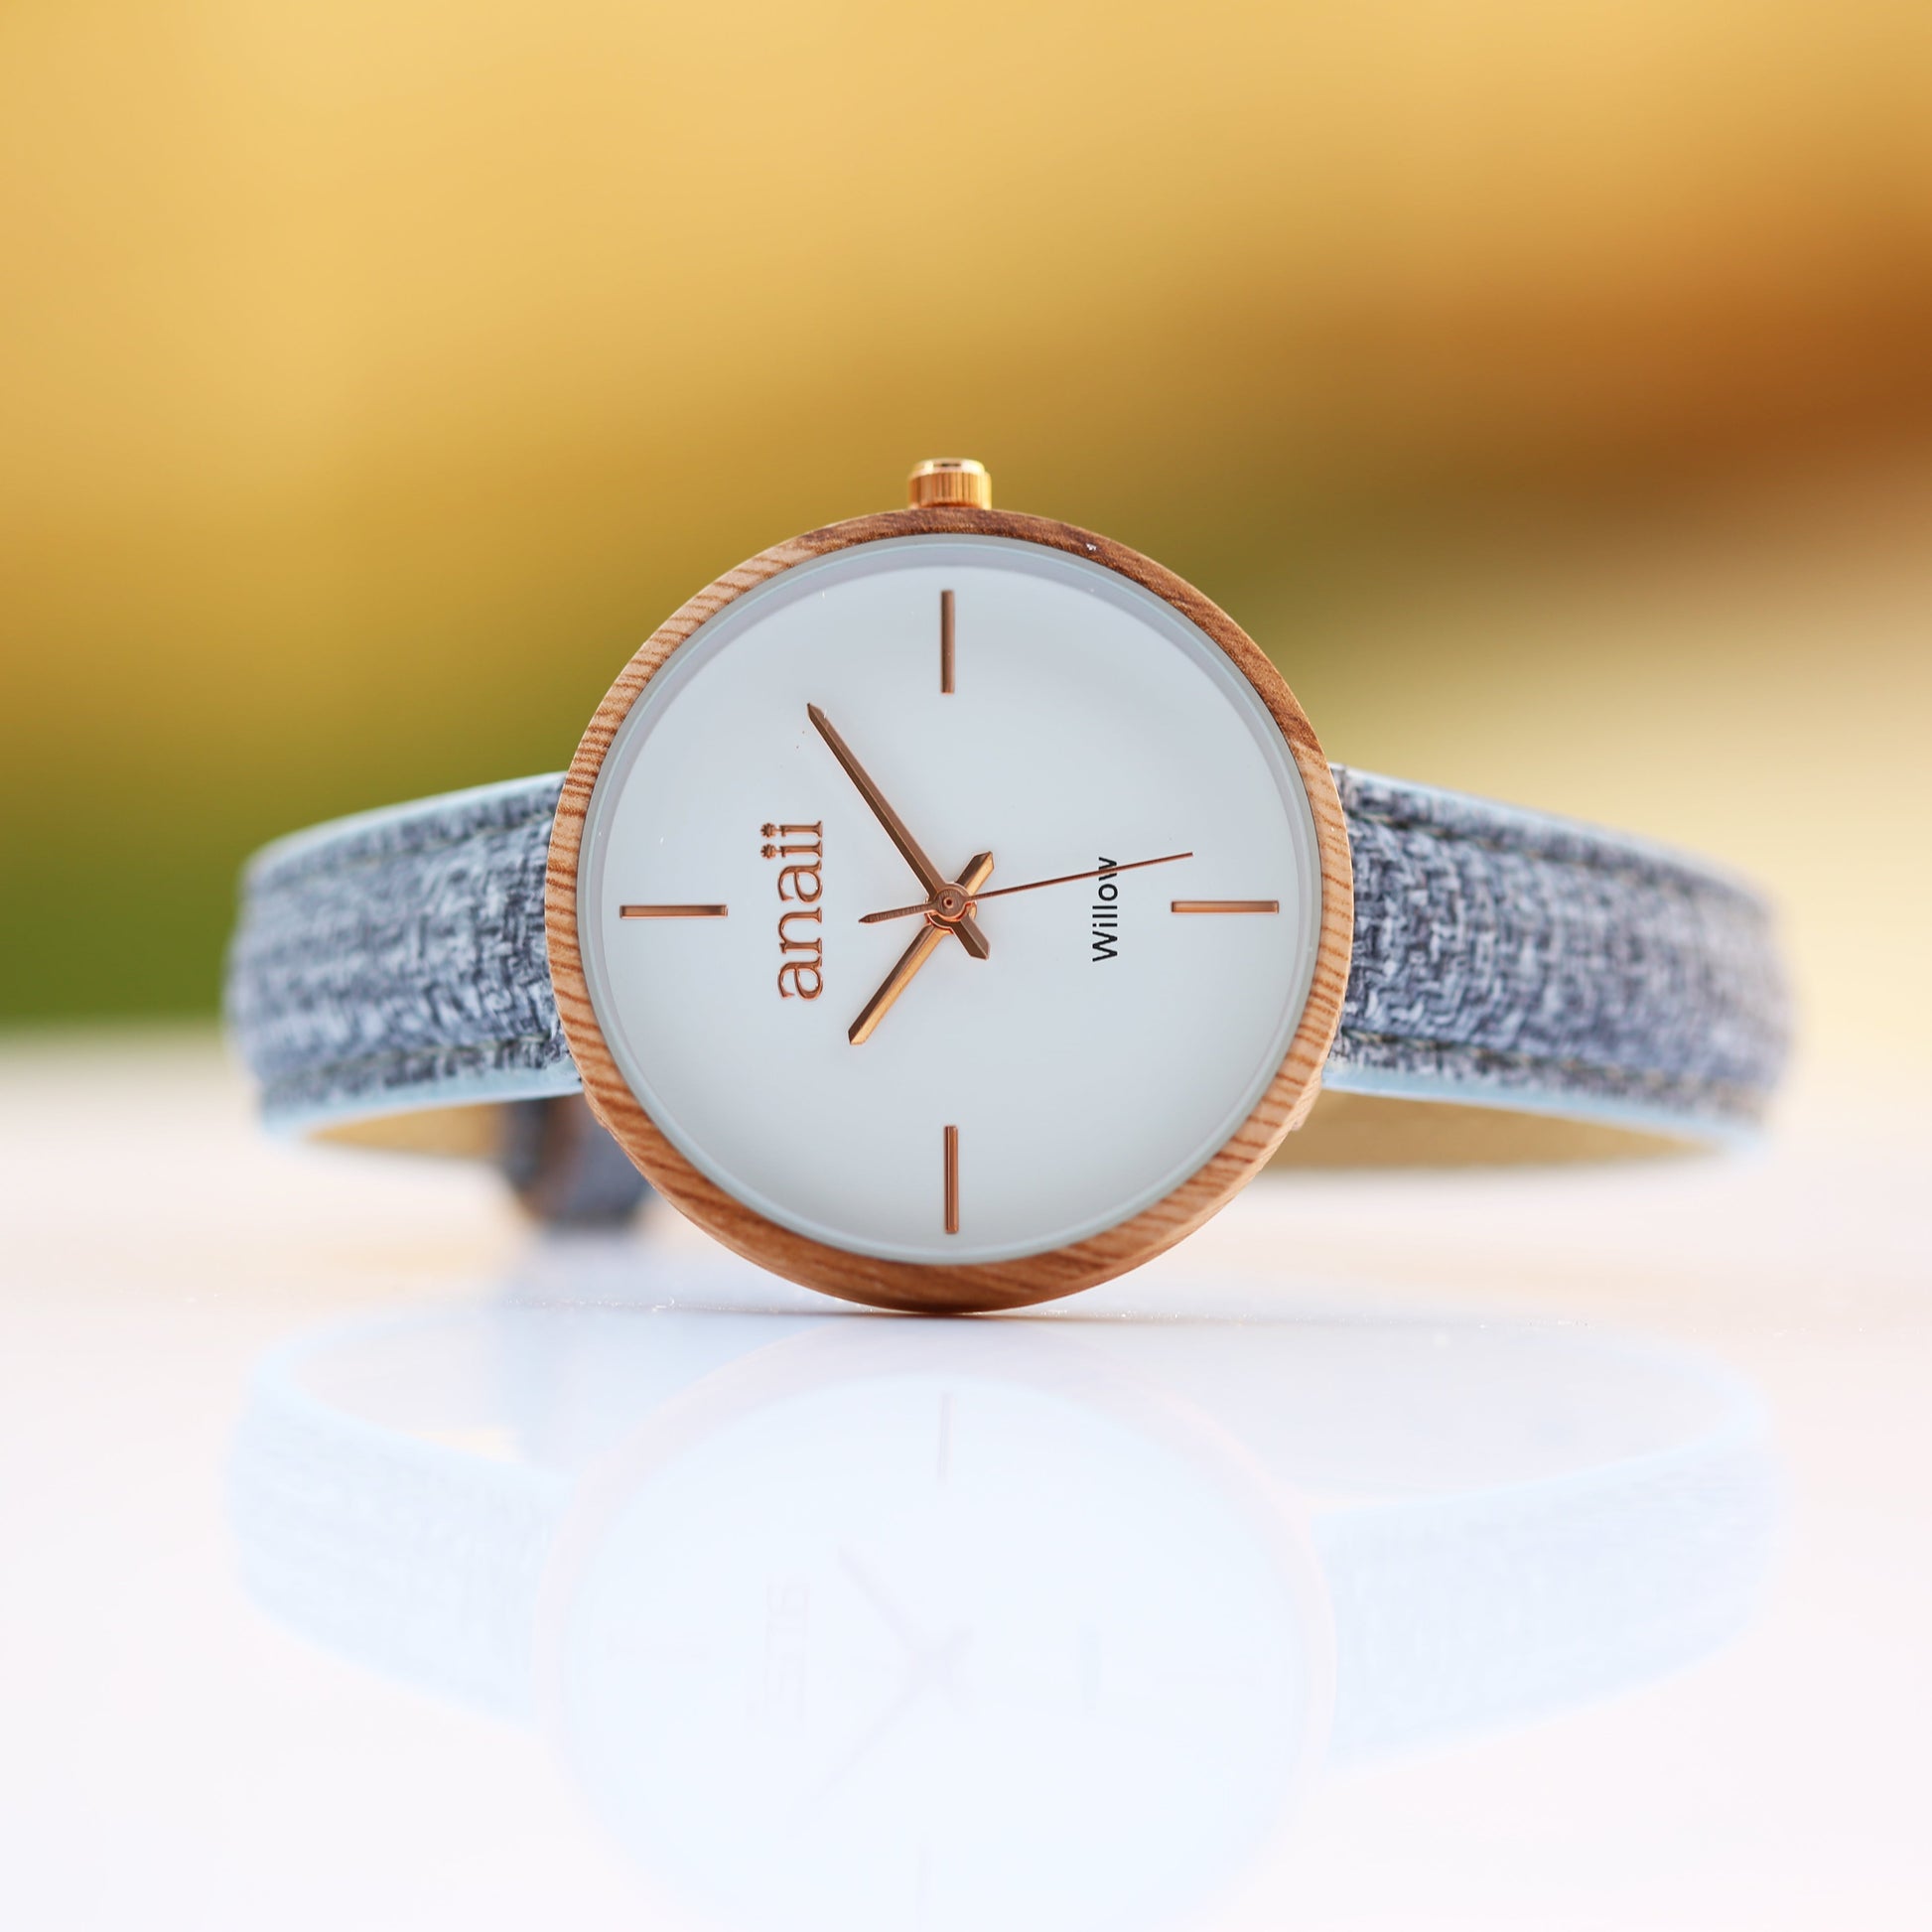 Personalized Ladies' Watches - Personalized Anaii Watch - Lake Blue 